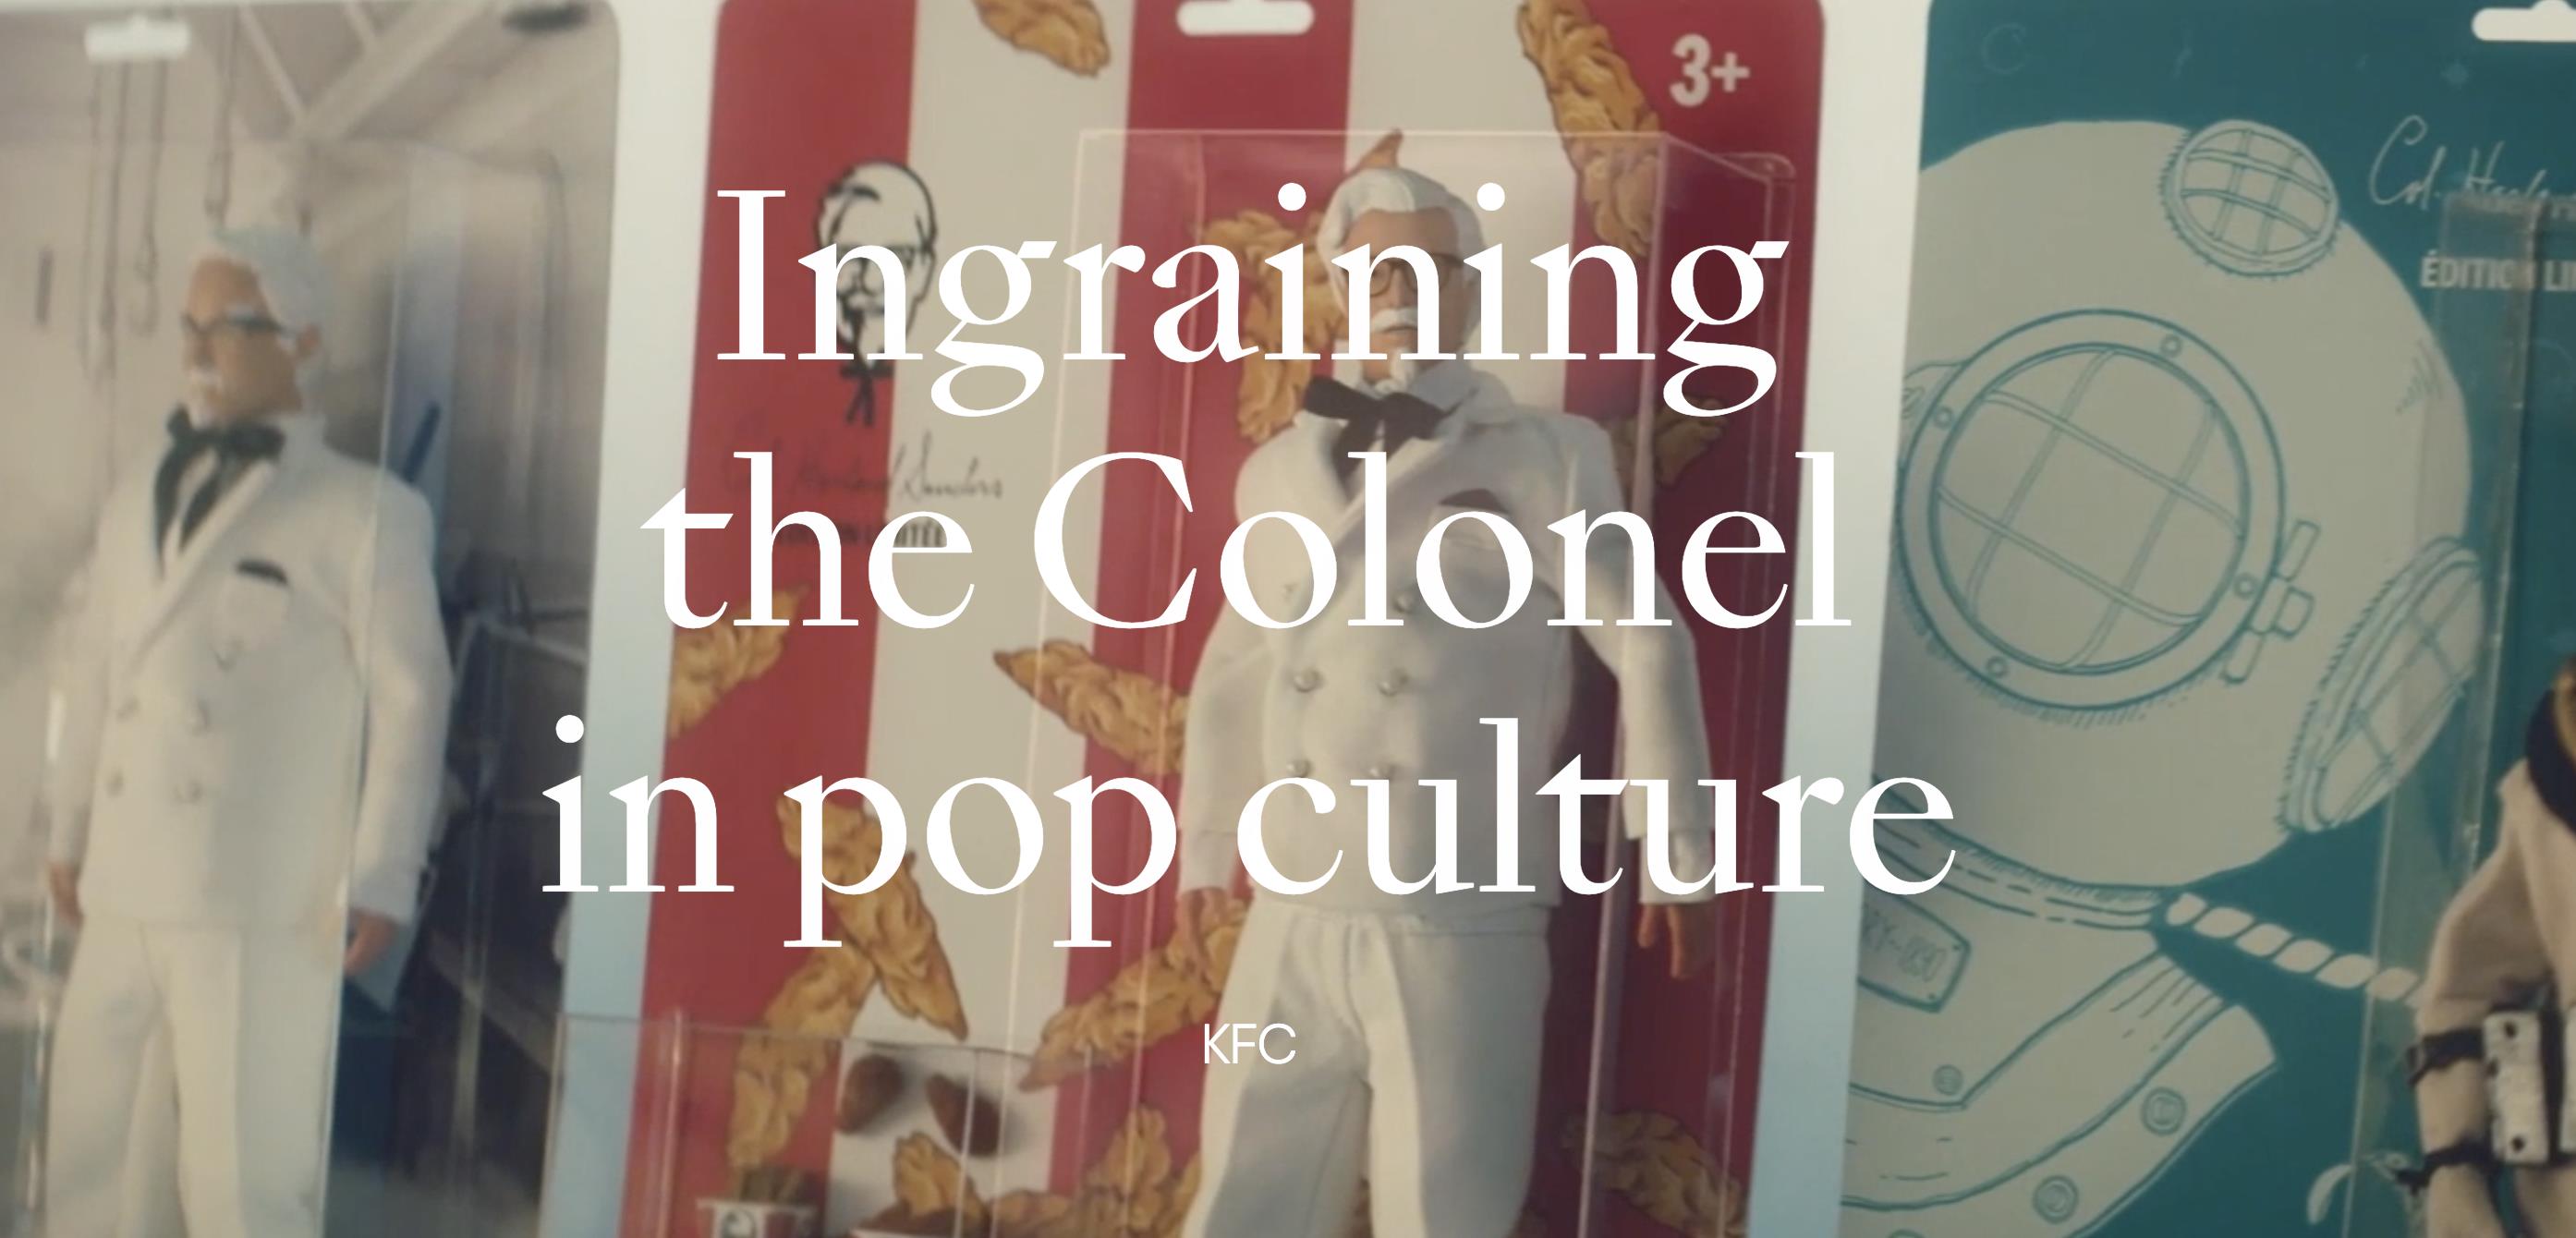 KFC - Ingraining the Colonel in pop culture